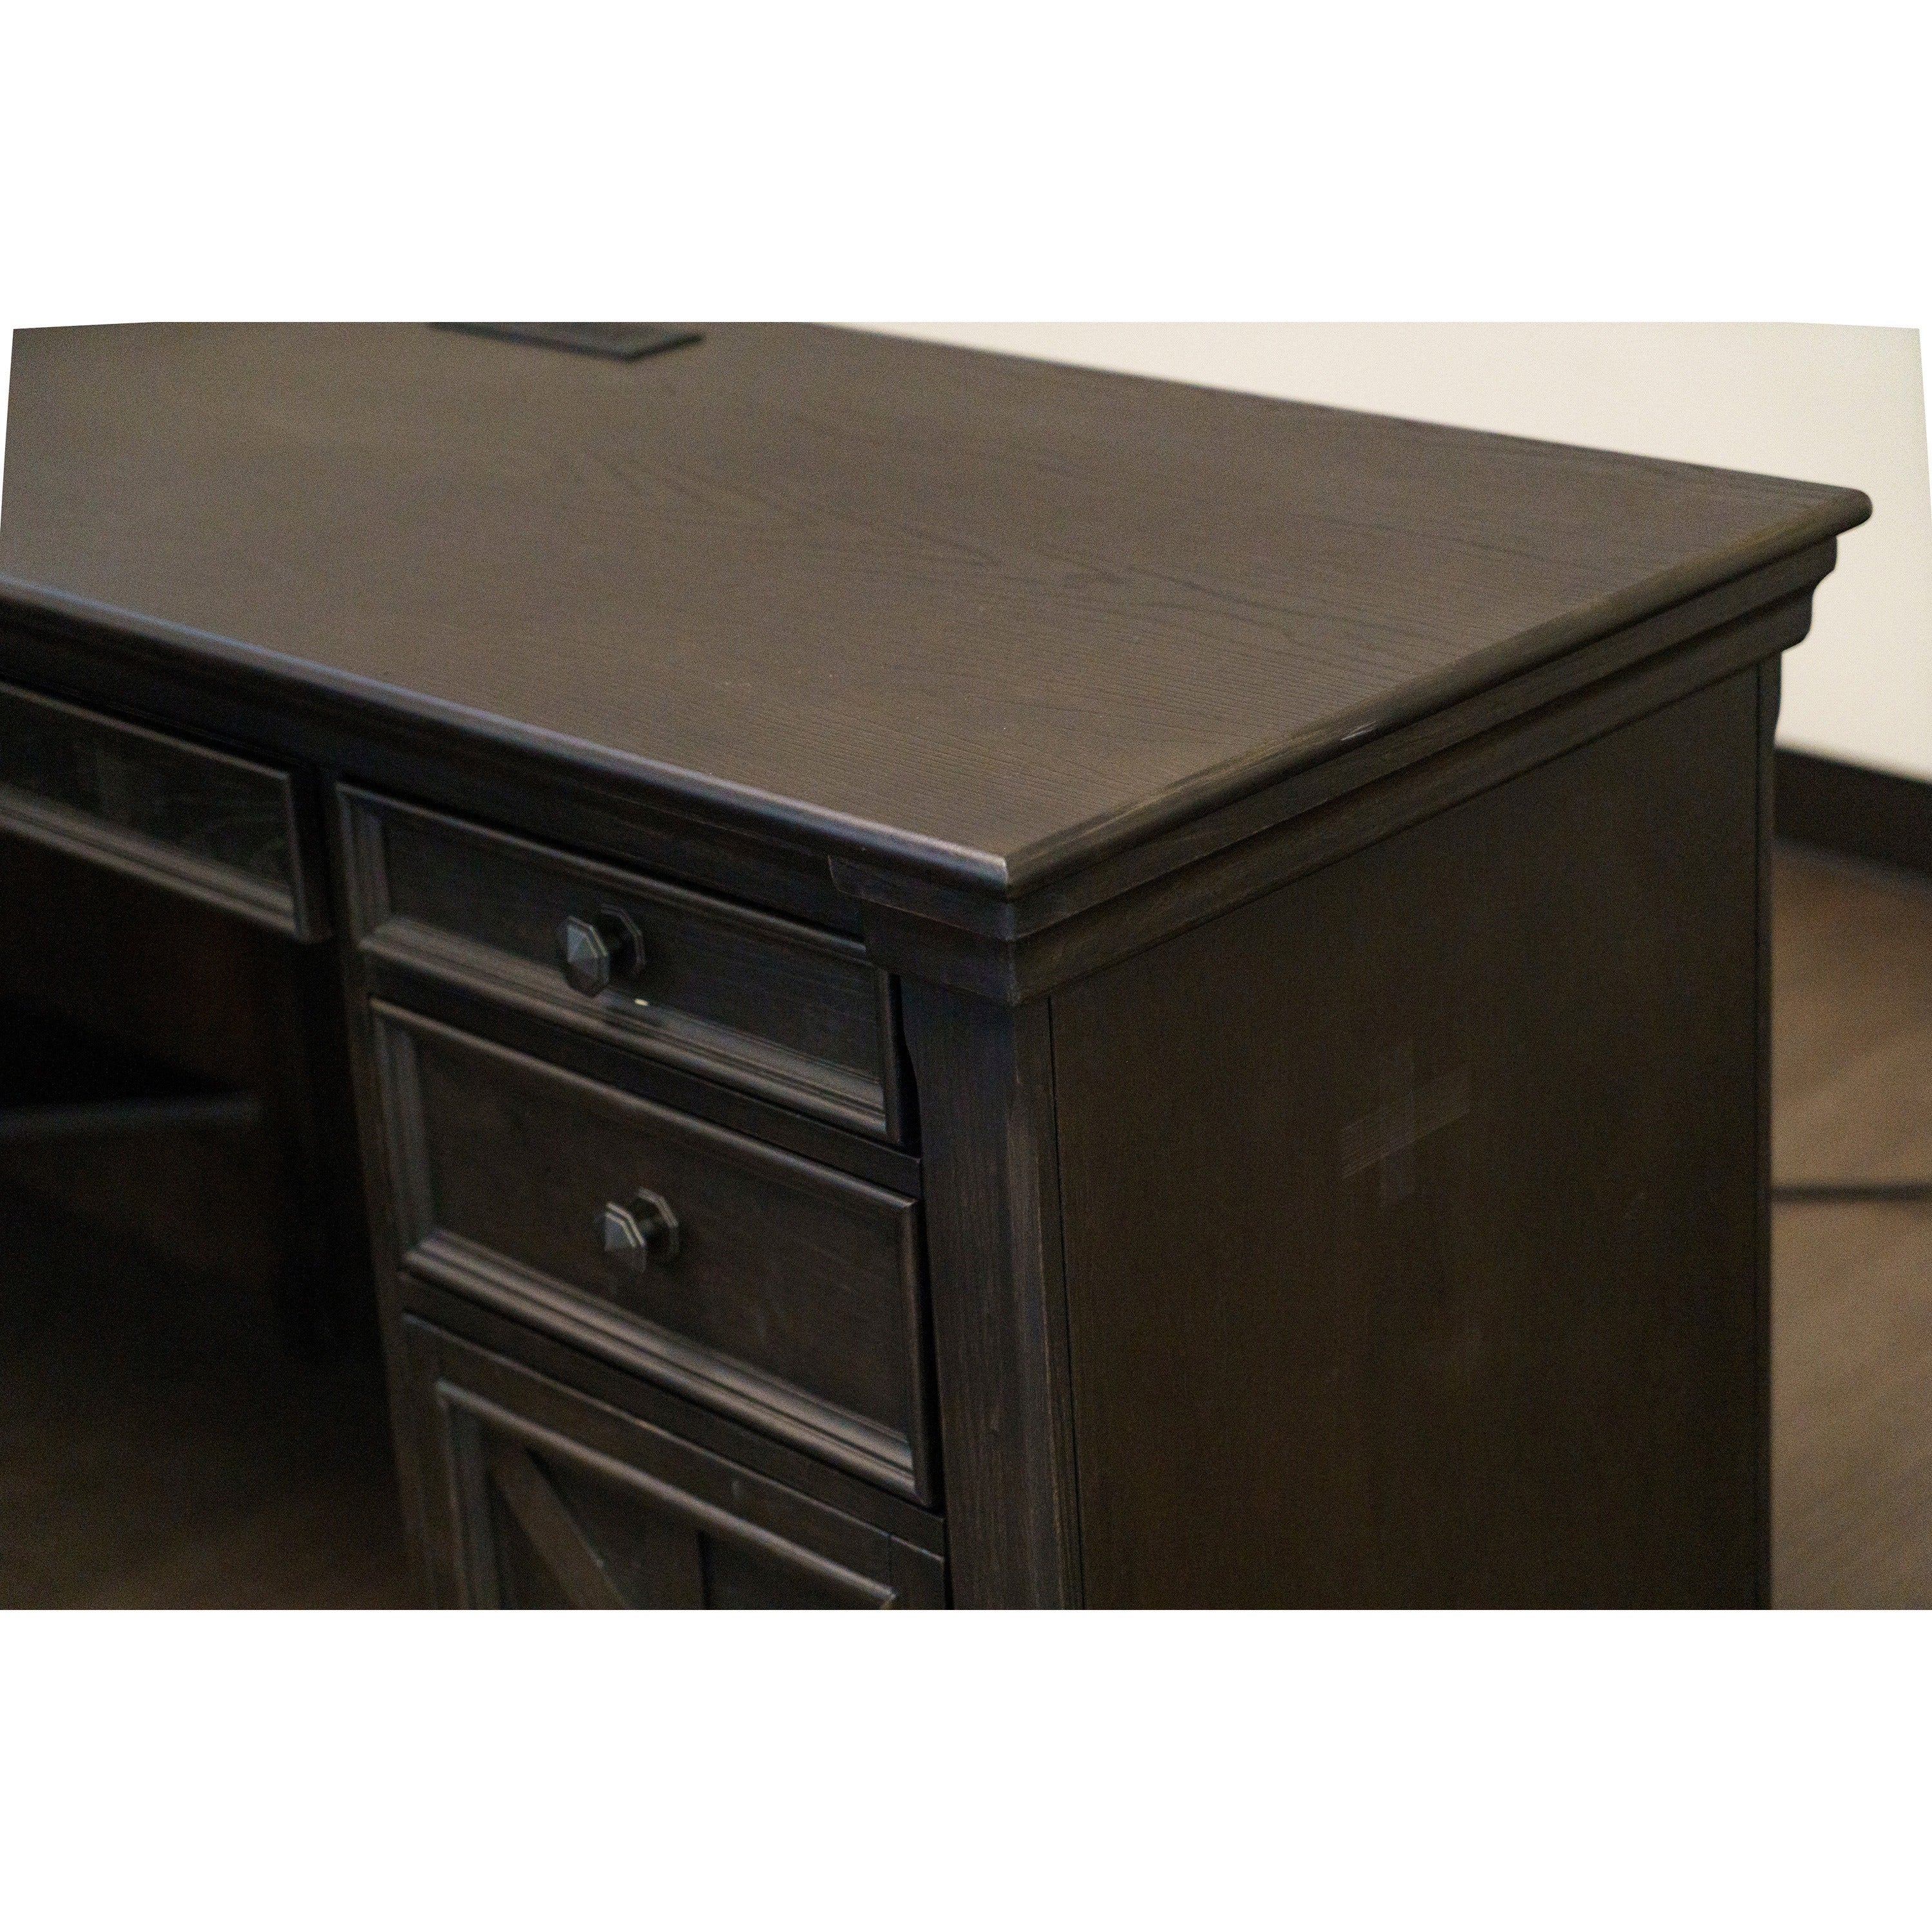 martin-kingston-desk-with-pedestal-box-1-of-2-66-x-3030-4-x-utility-file-drawers-material-wood-finish-dark-chocolate-rub-through_mrtimkn684r - 5